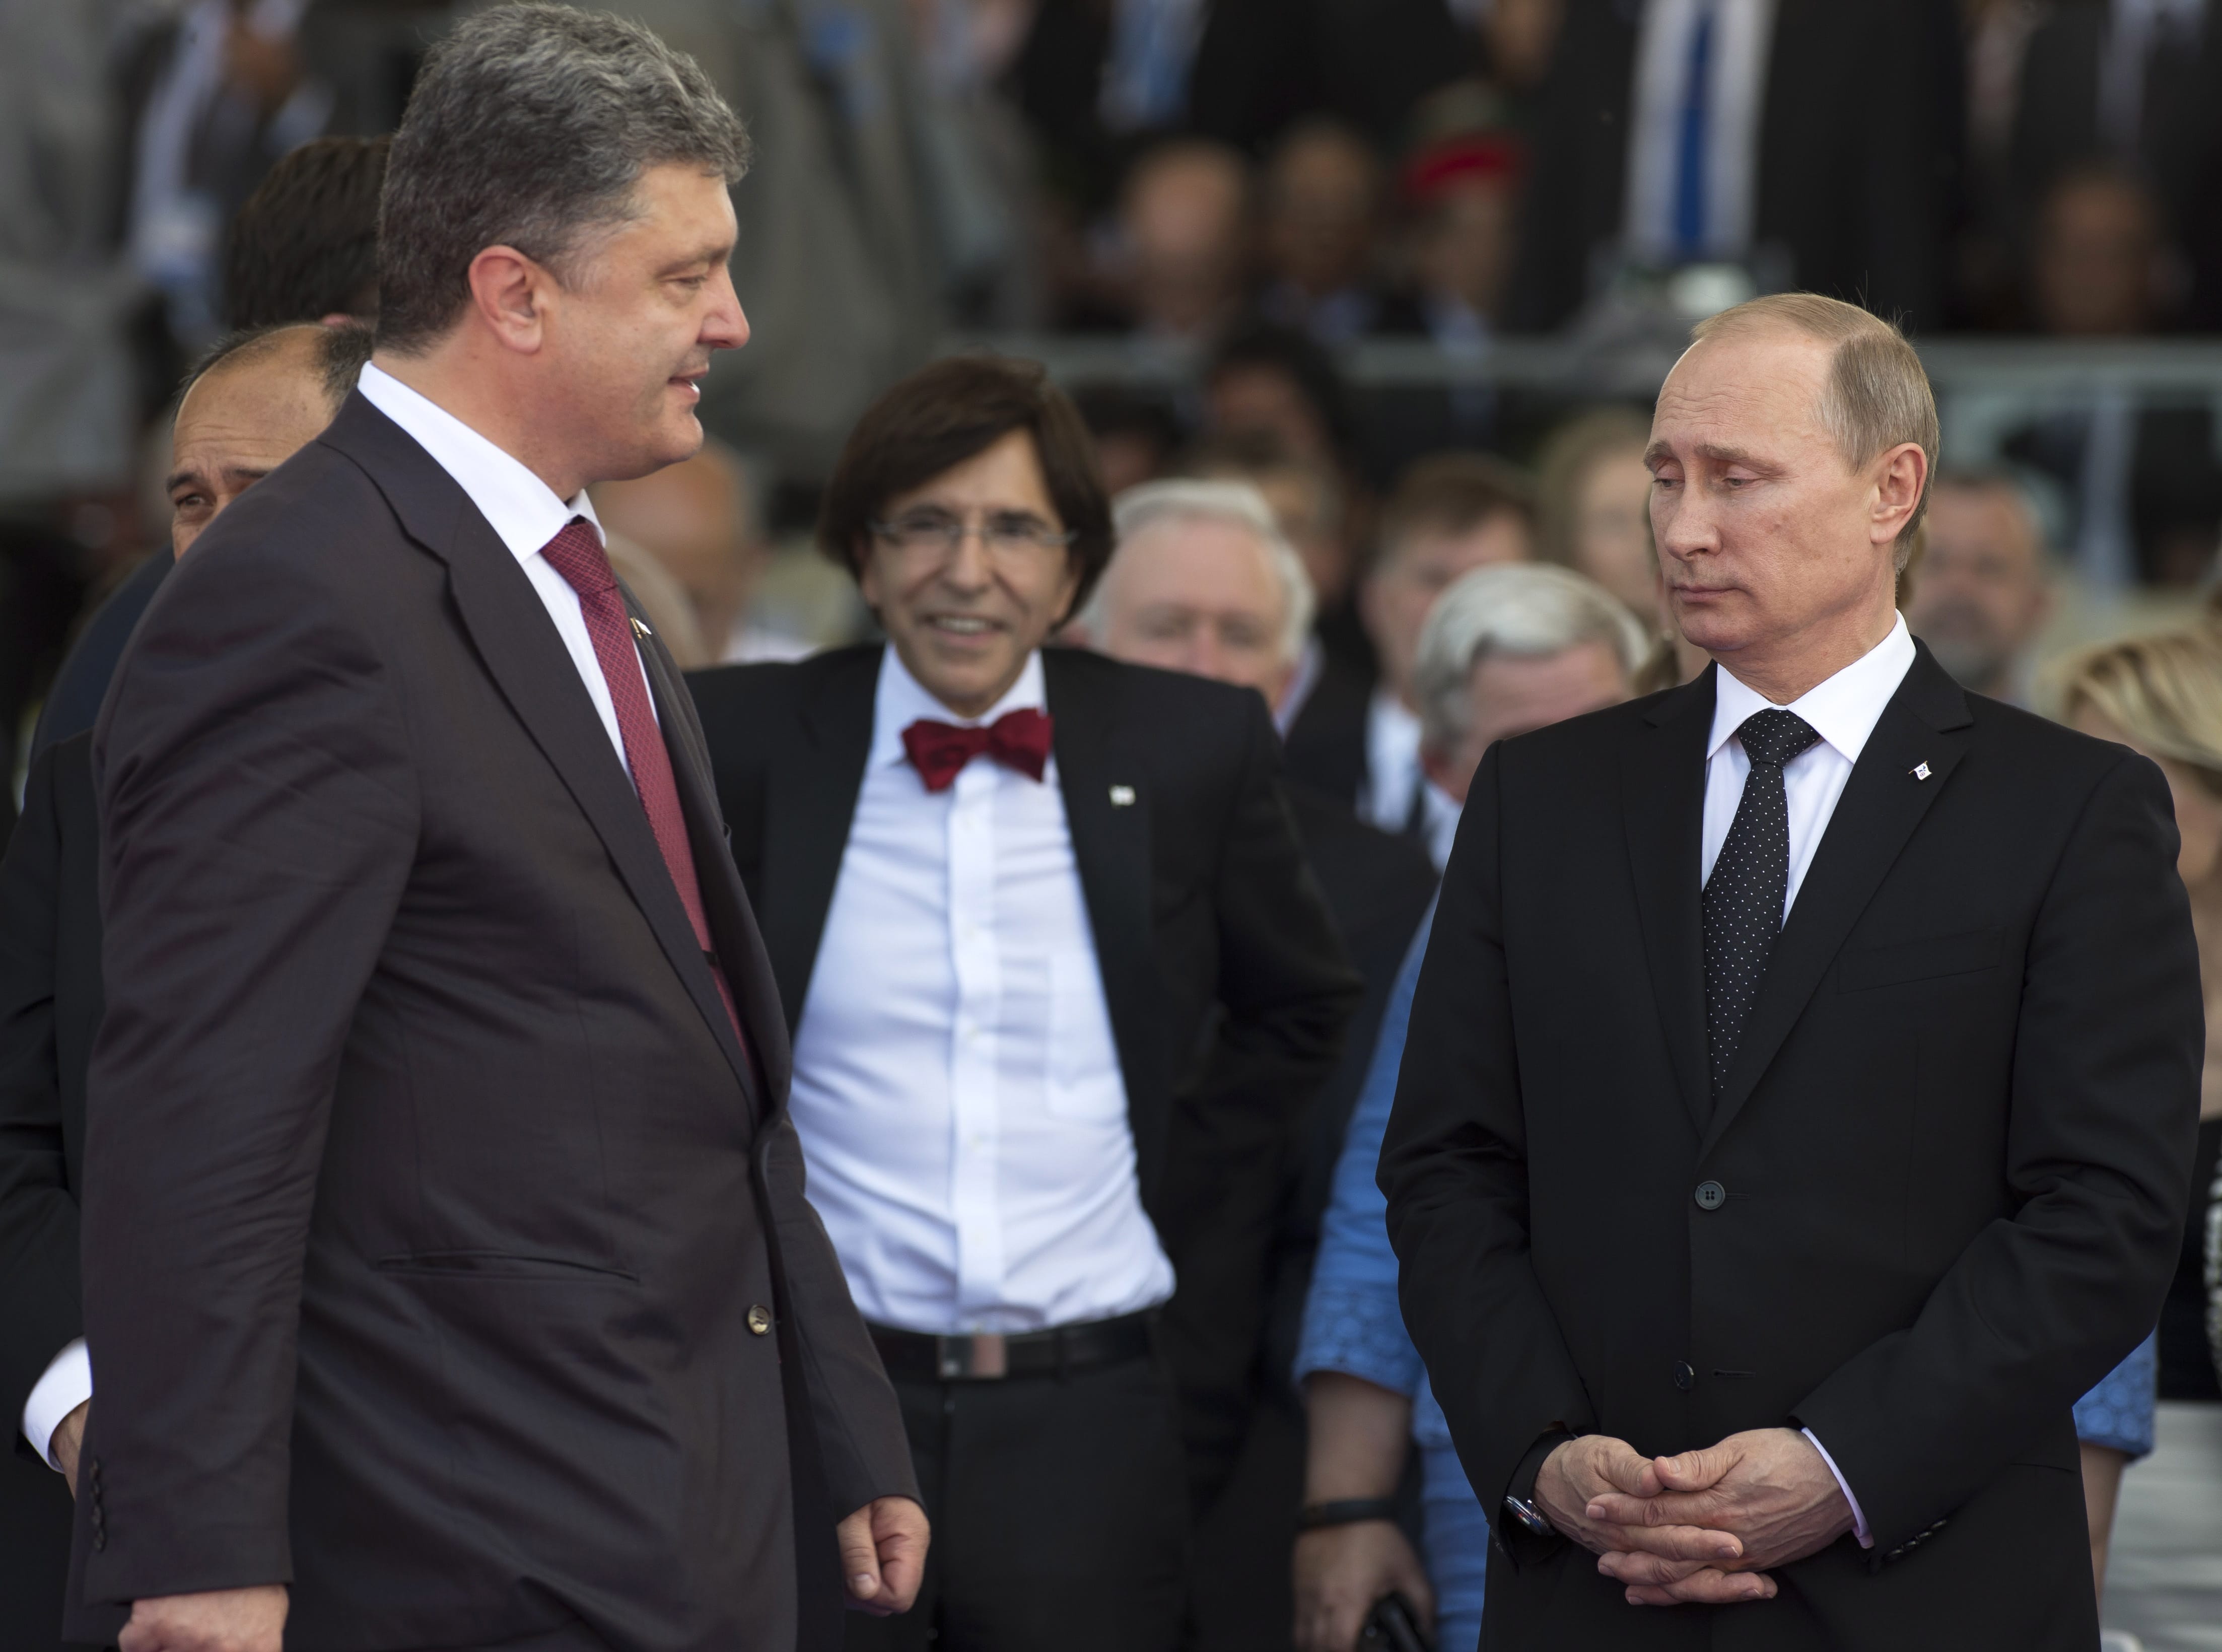 Ukraine's President-elect Petro Poroshenko, left, walks past Russian President Vladimir Putin, right, on Friday during D-Day ceremonies in Ouistreham, France.